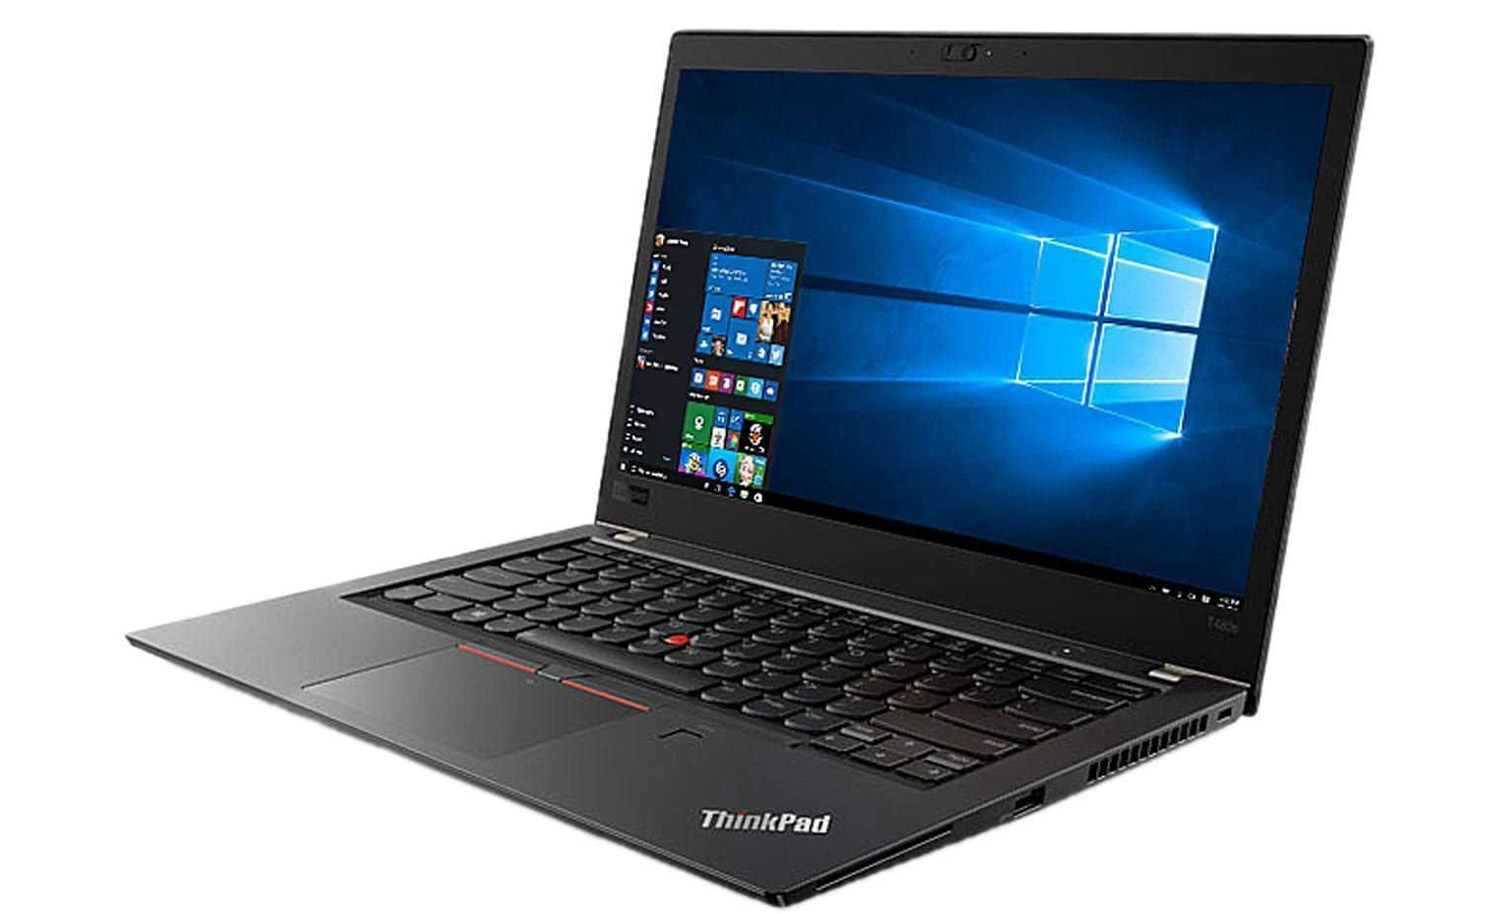 Lenovo ThinkPad T480s Intel Core i7 8th Gen 8GB RAM 256GB SSD Touchscreen Windows 10 Pro